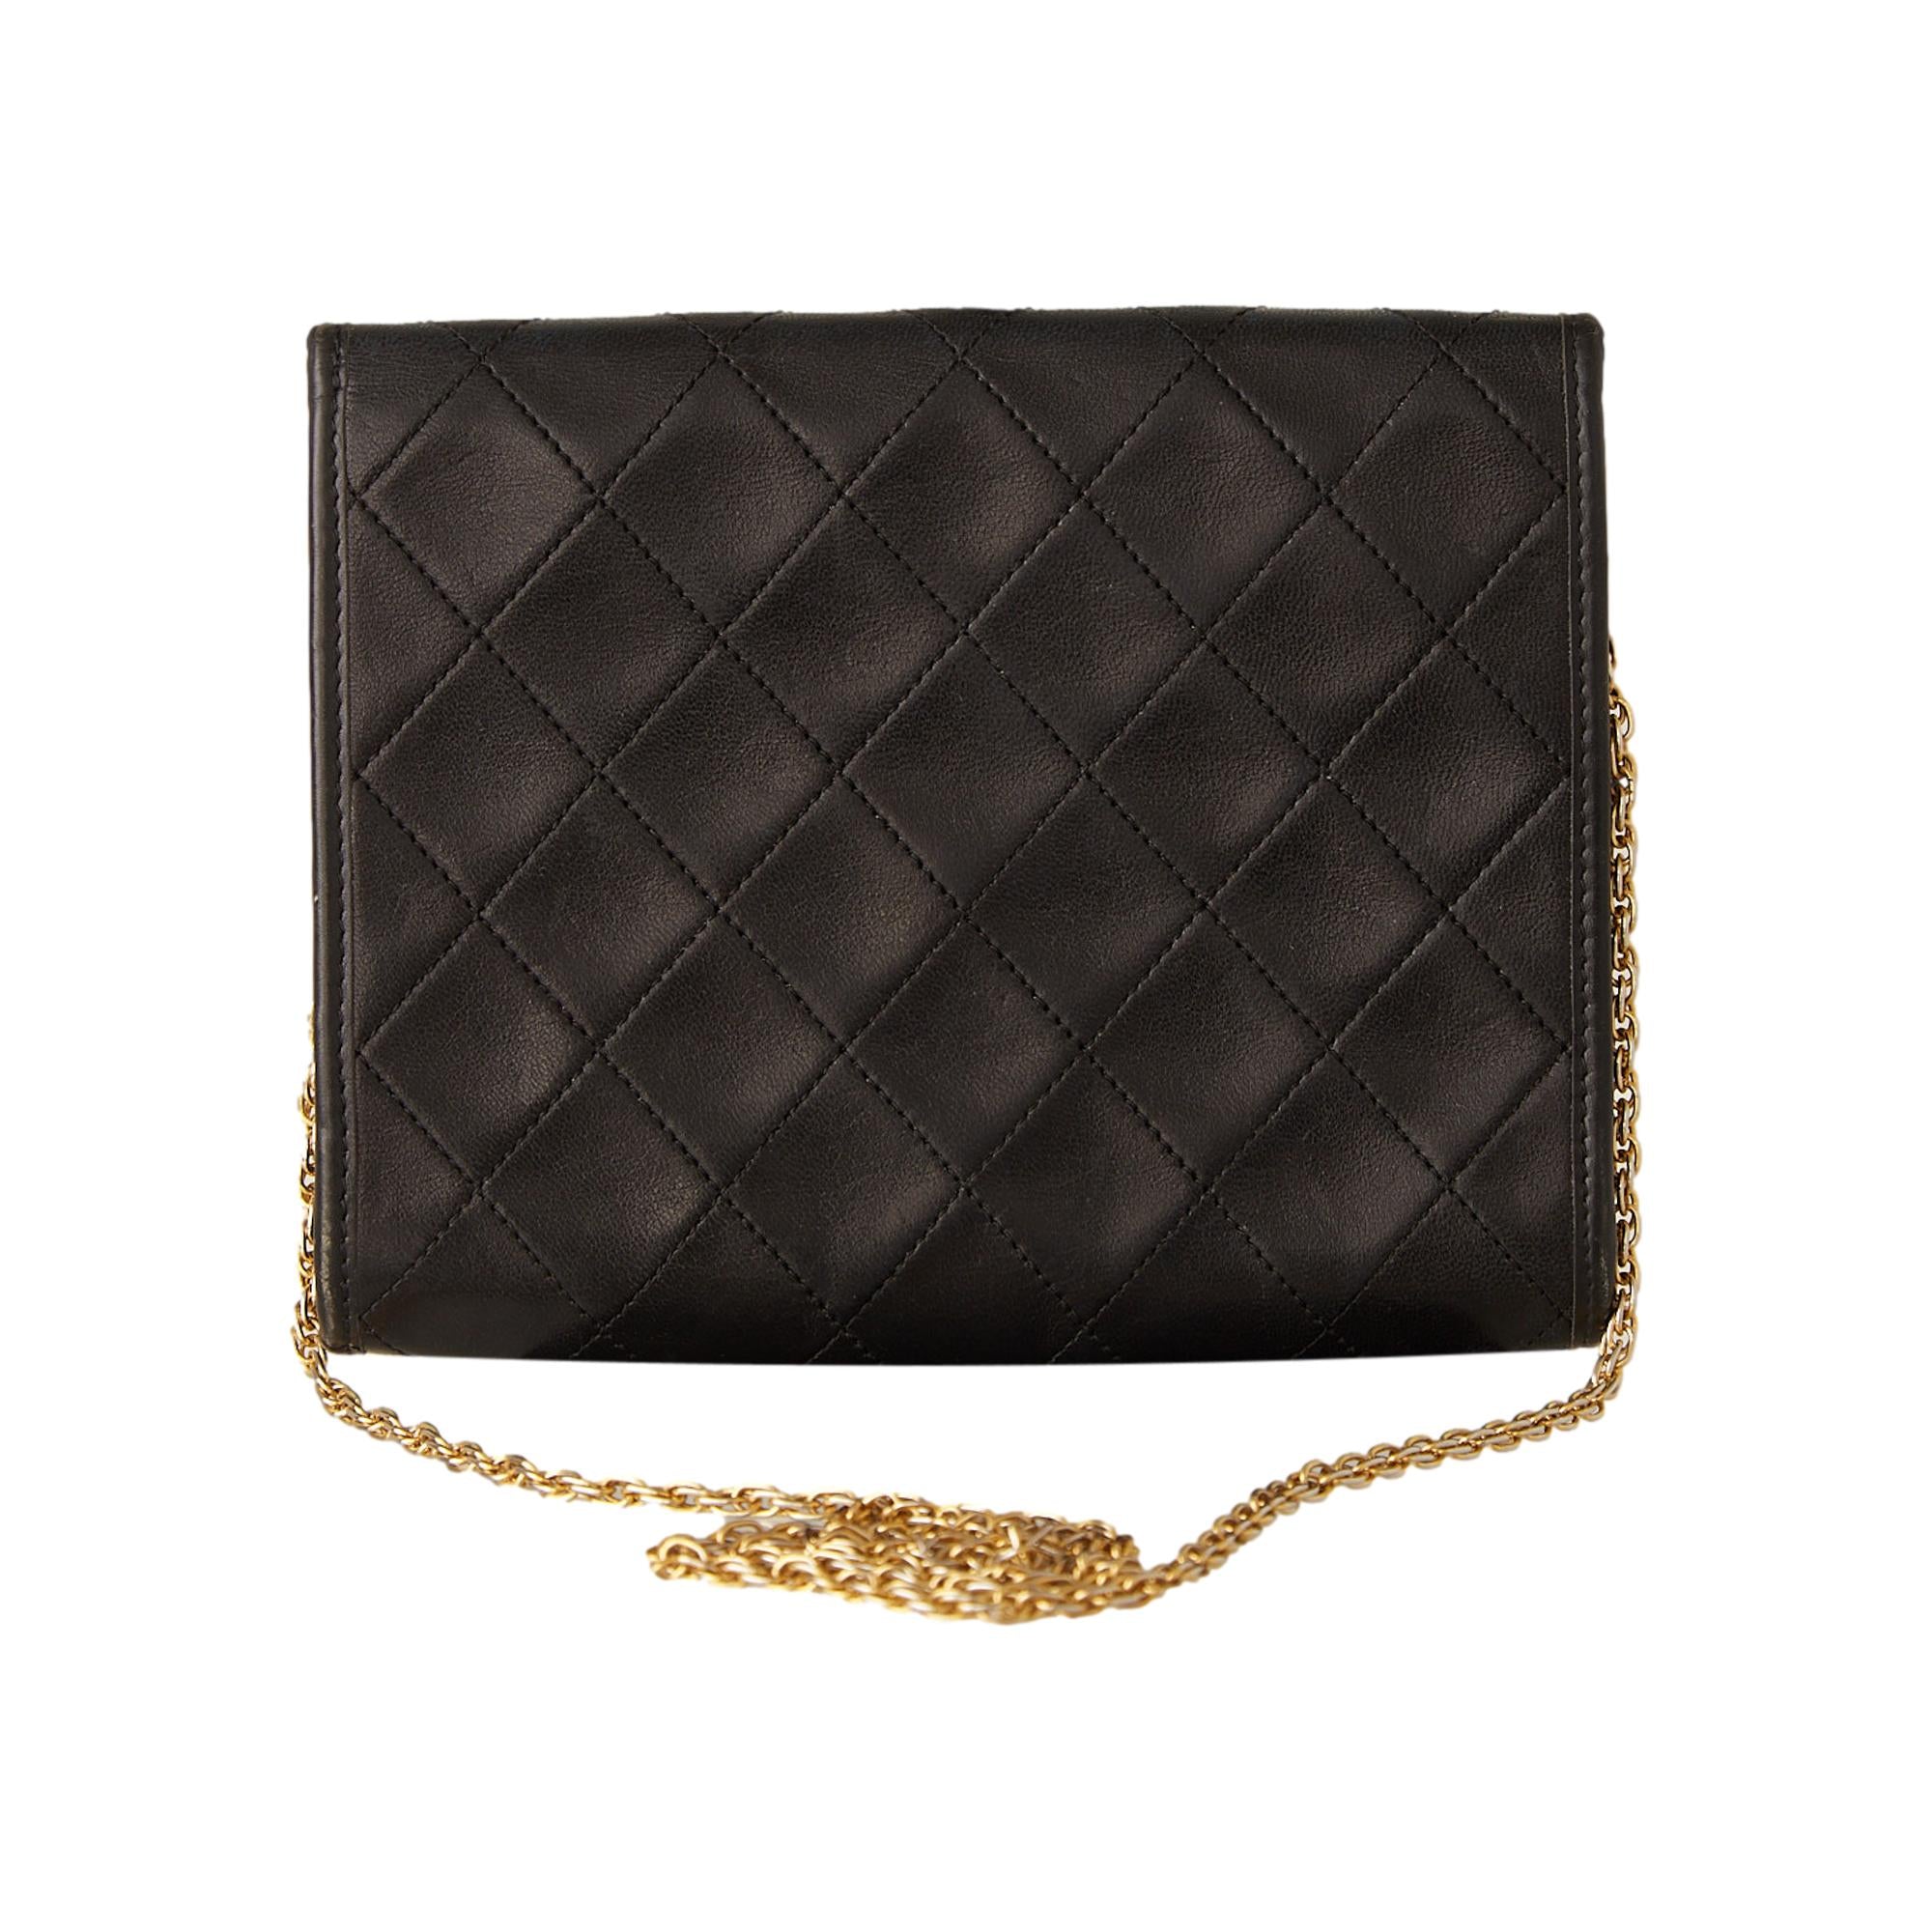 Chanel Black Mini Chain Bag